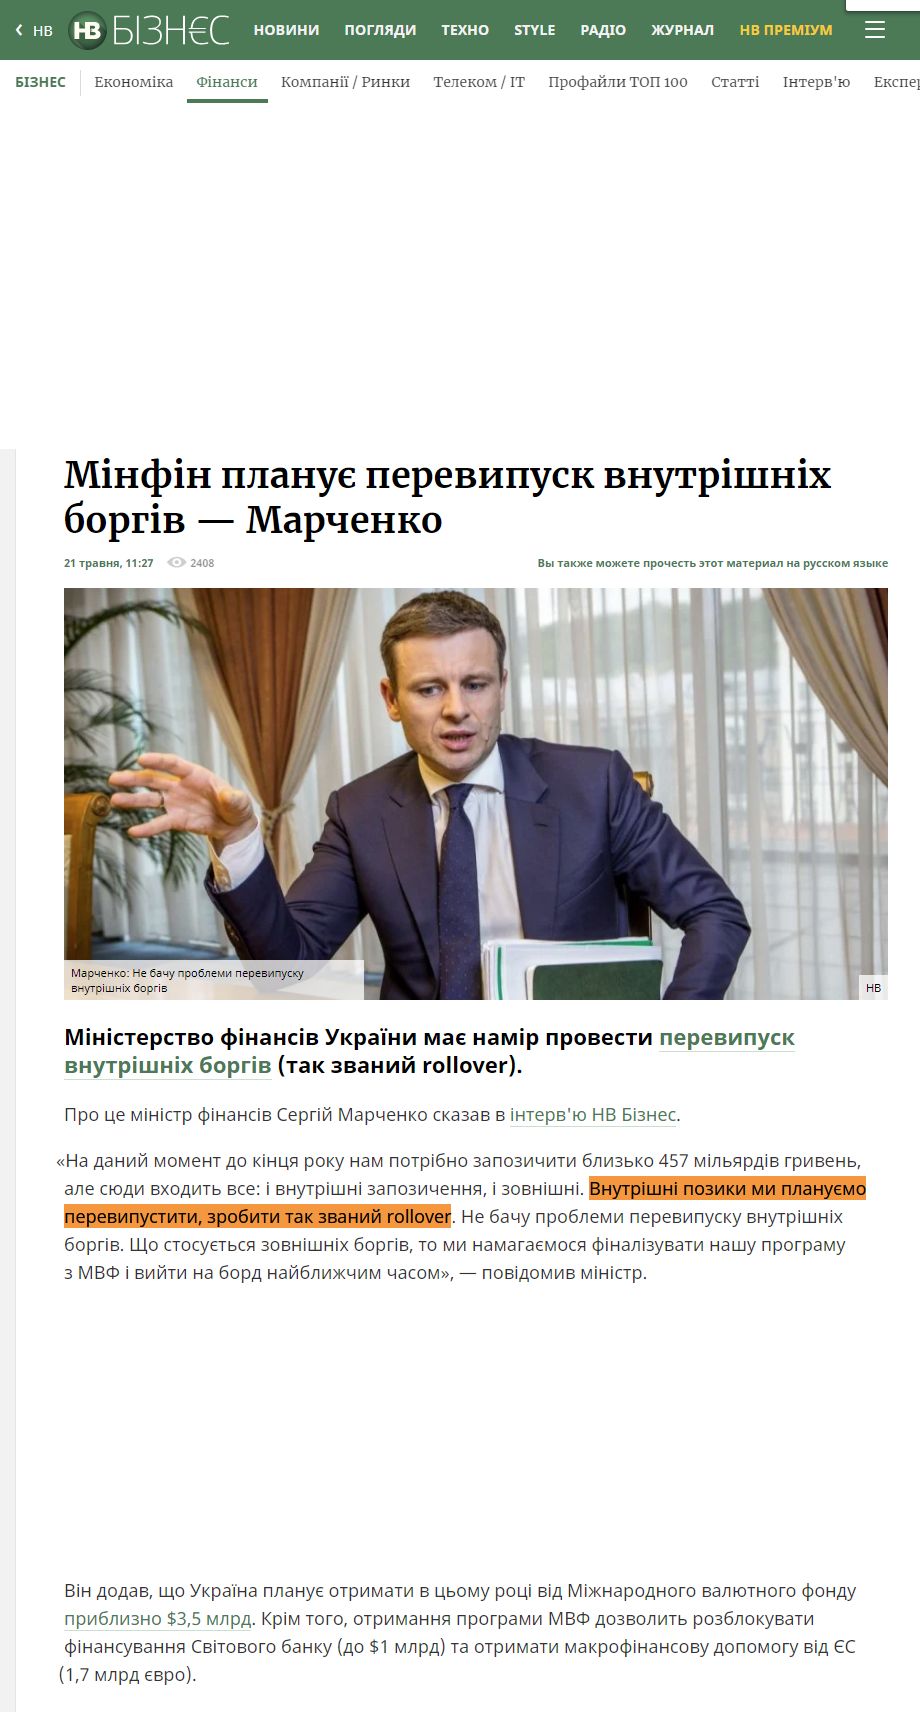 https://nv.ua/ukr/biz/finance/marchenko-minfin-provede-perevipusk-vnutrishnih-borgiv-novini-ukrajini-50089456.html